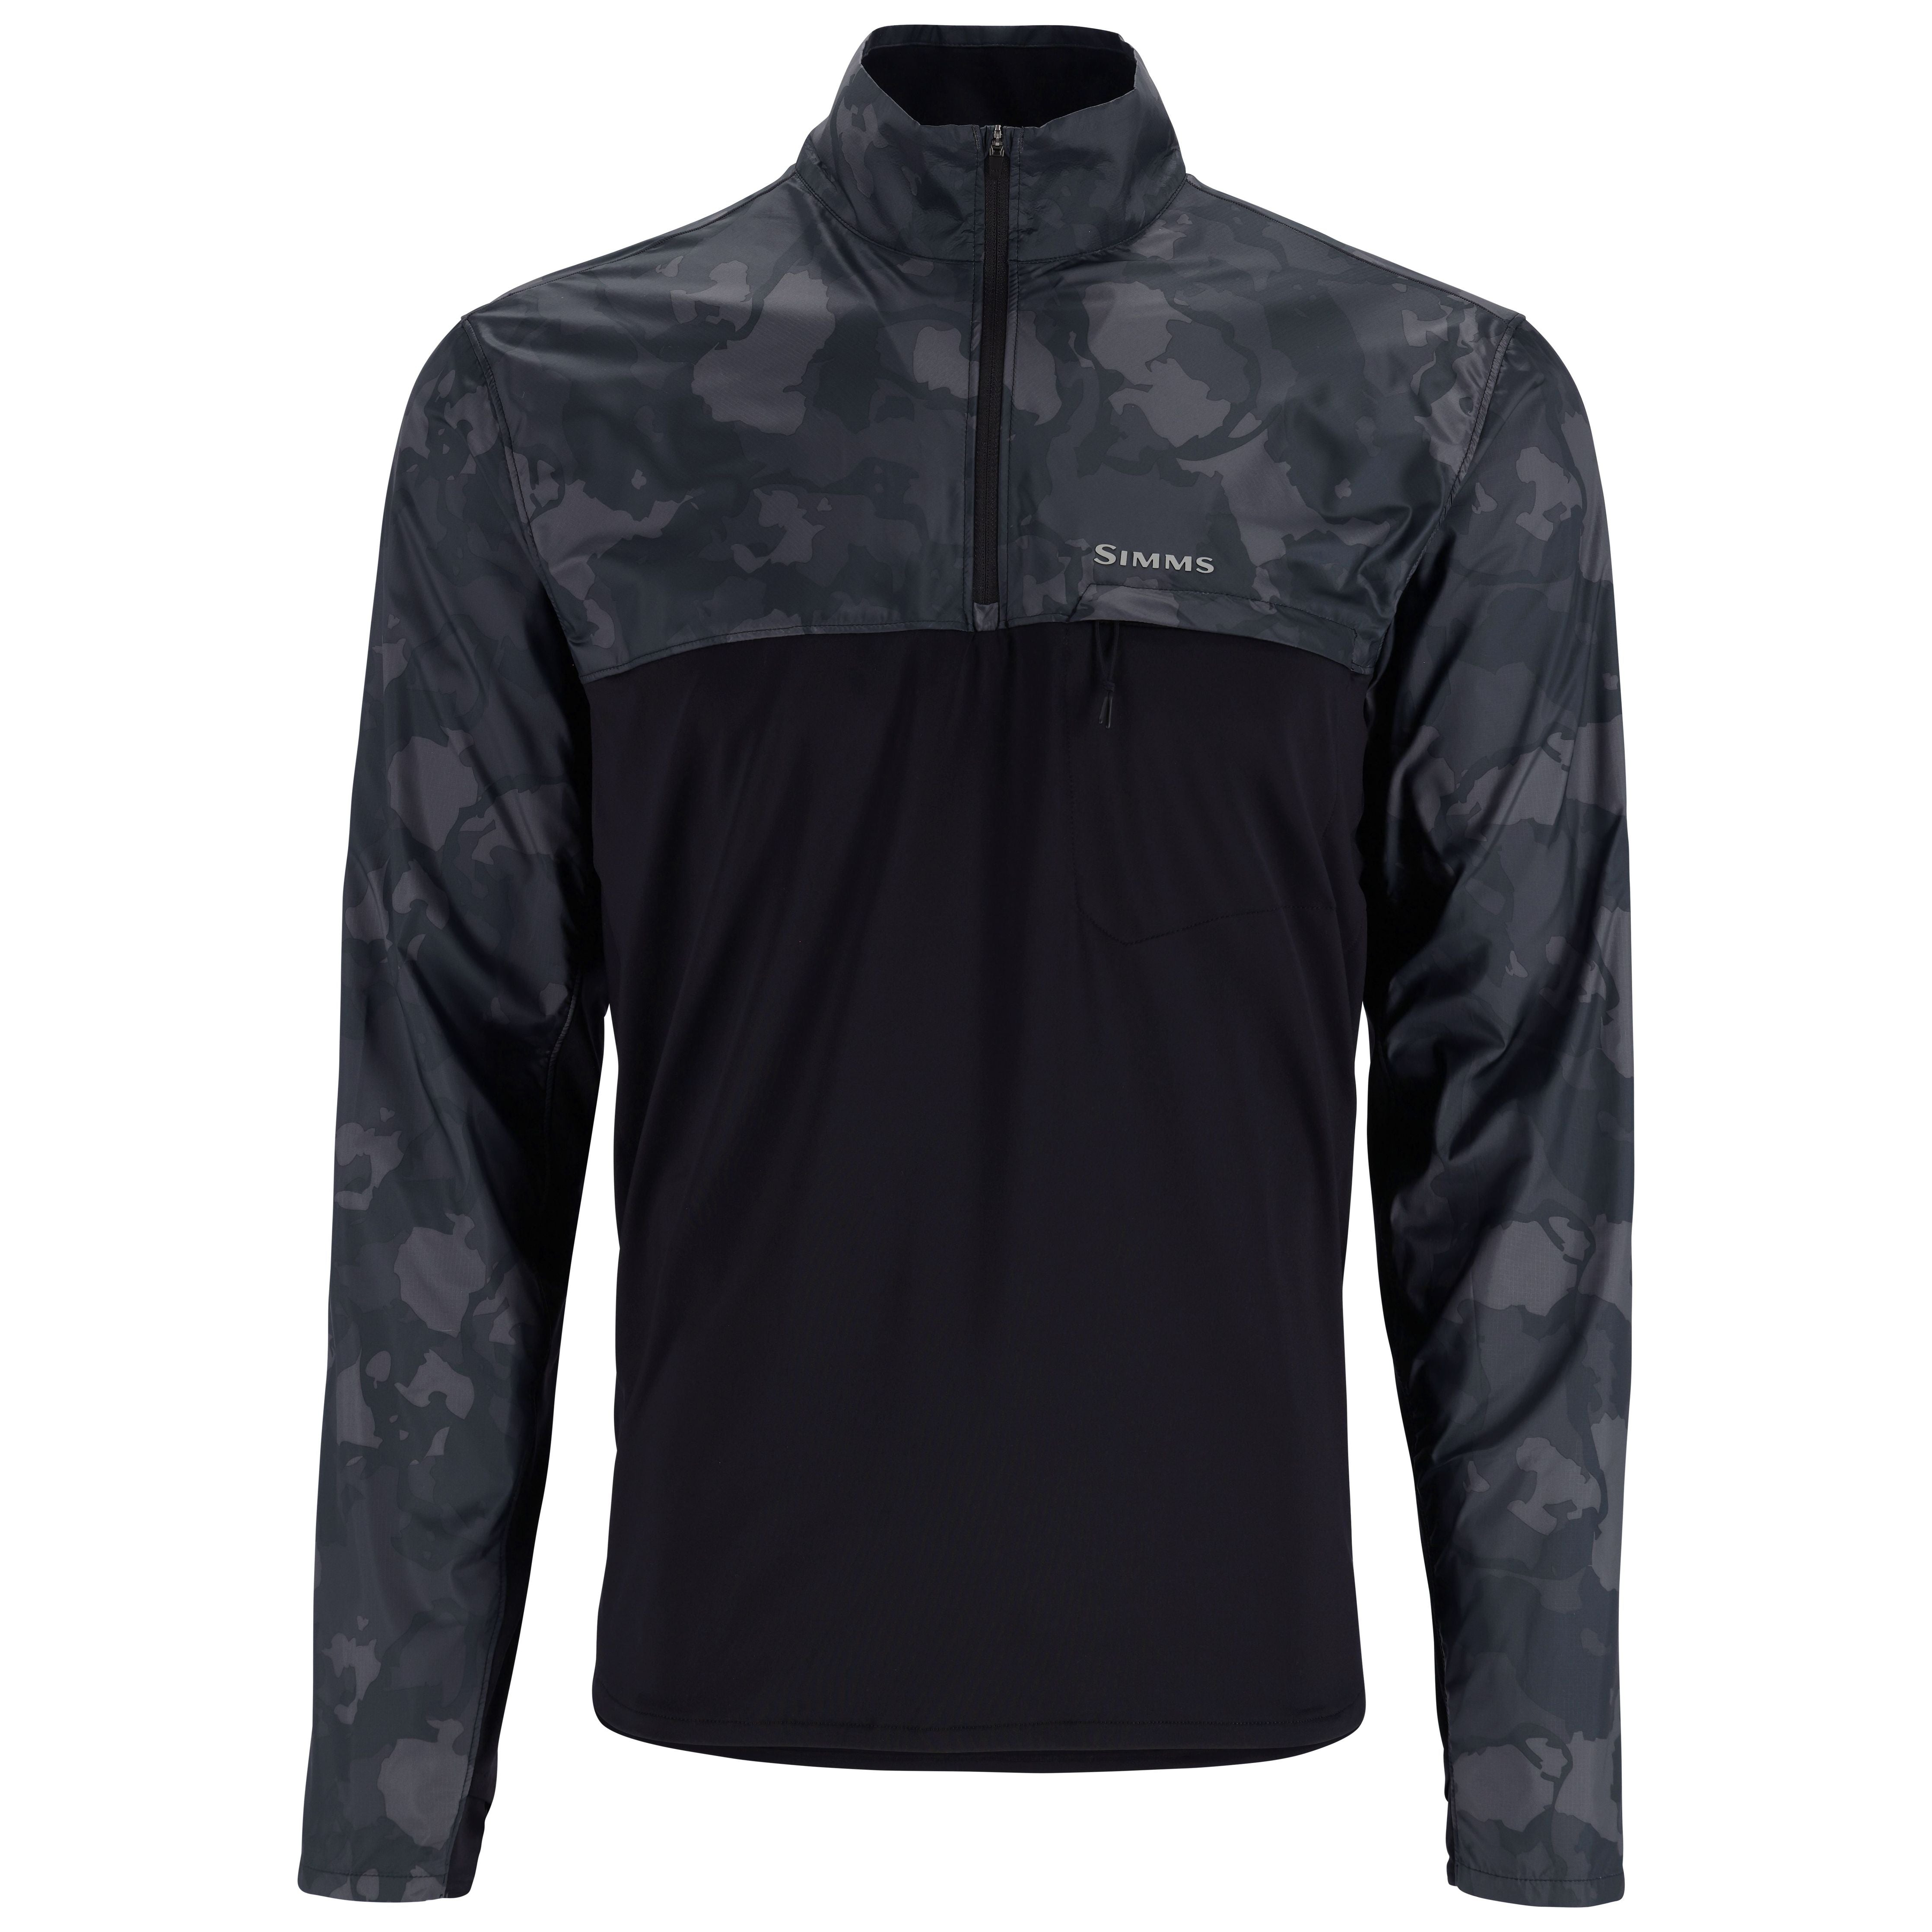 Simms SolarFlex Wind Half Zip Shirt Black/Regiment Camo Carbon Image 01